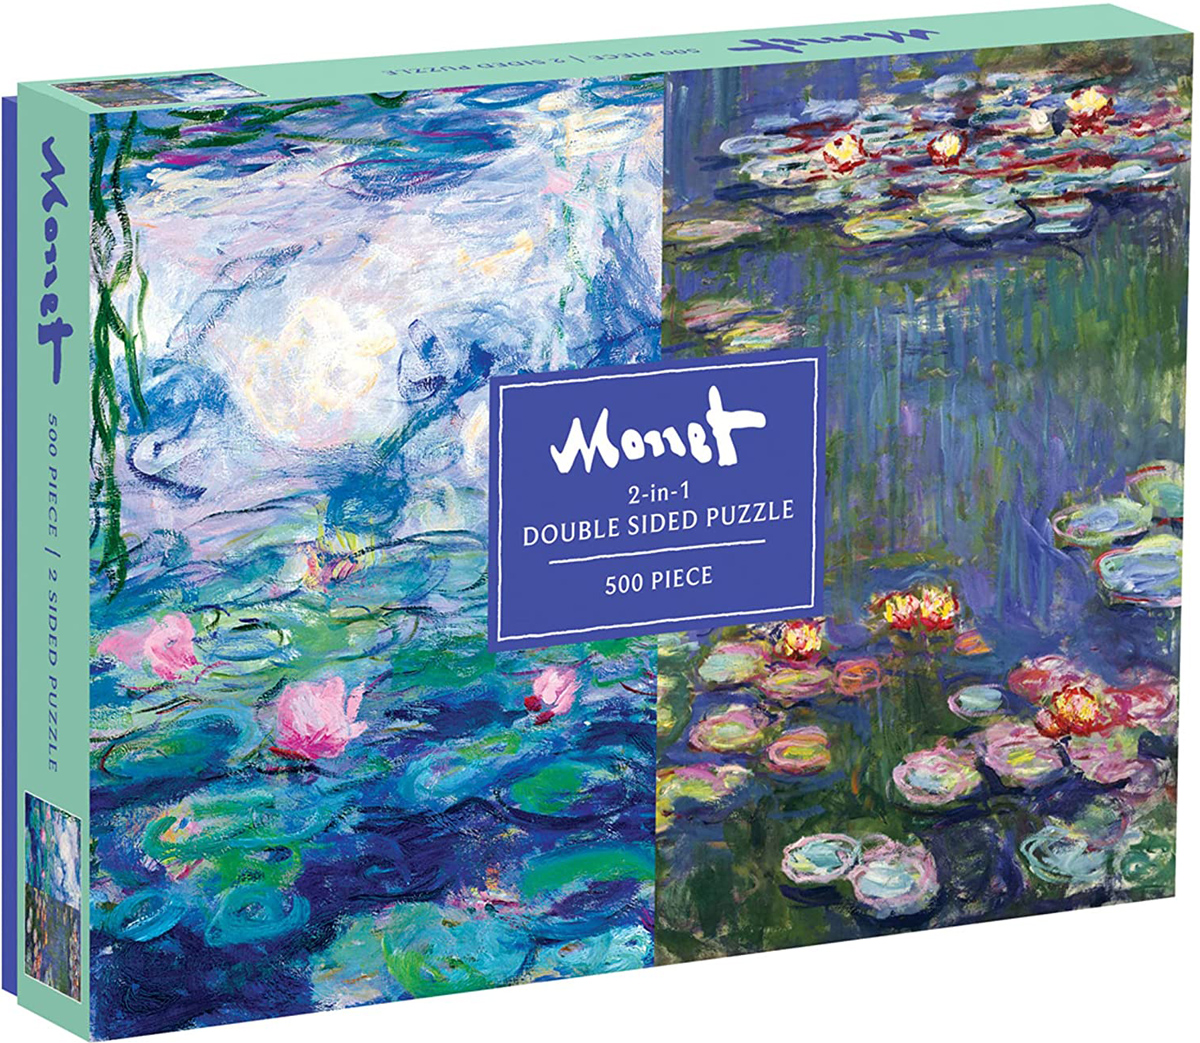 Monet 500 Piece Double Sided Puzzle Impressionism & Post-Impressionism Jigsaw Puzzle